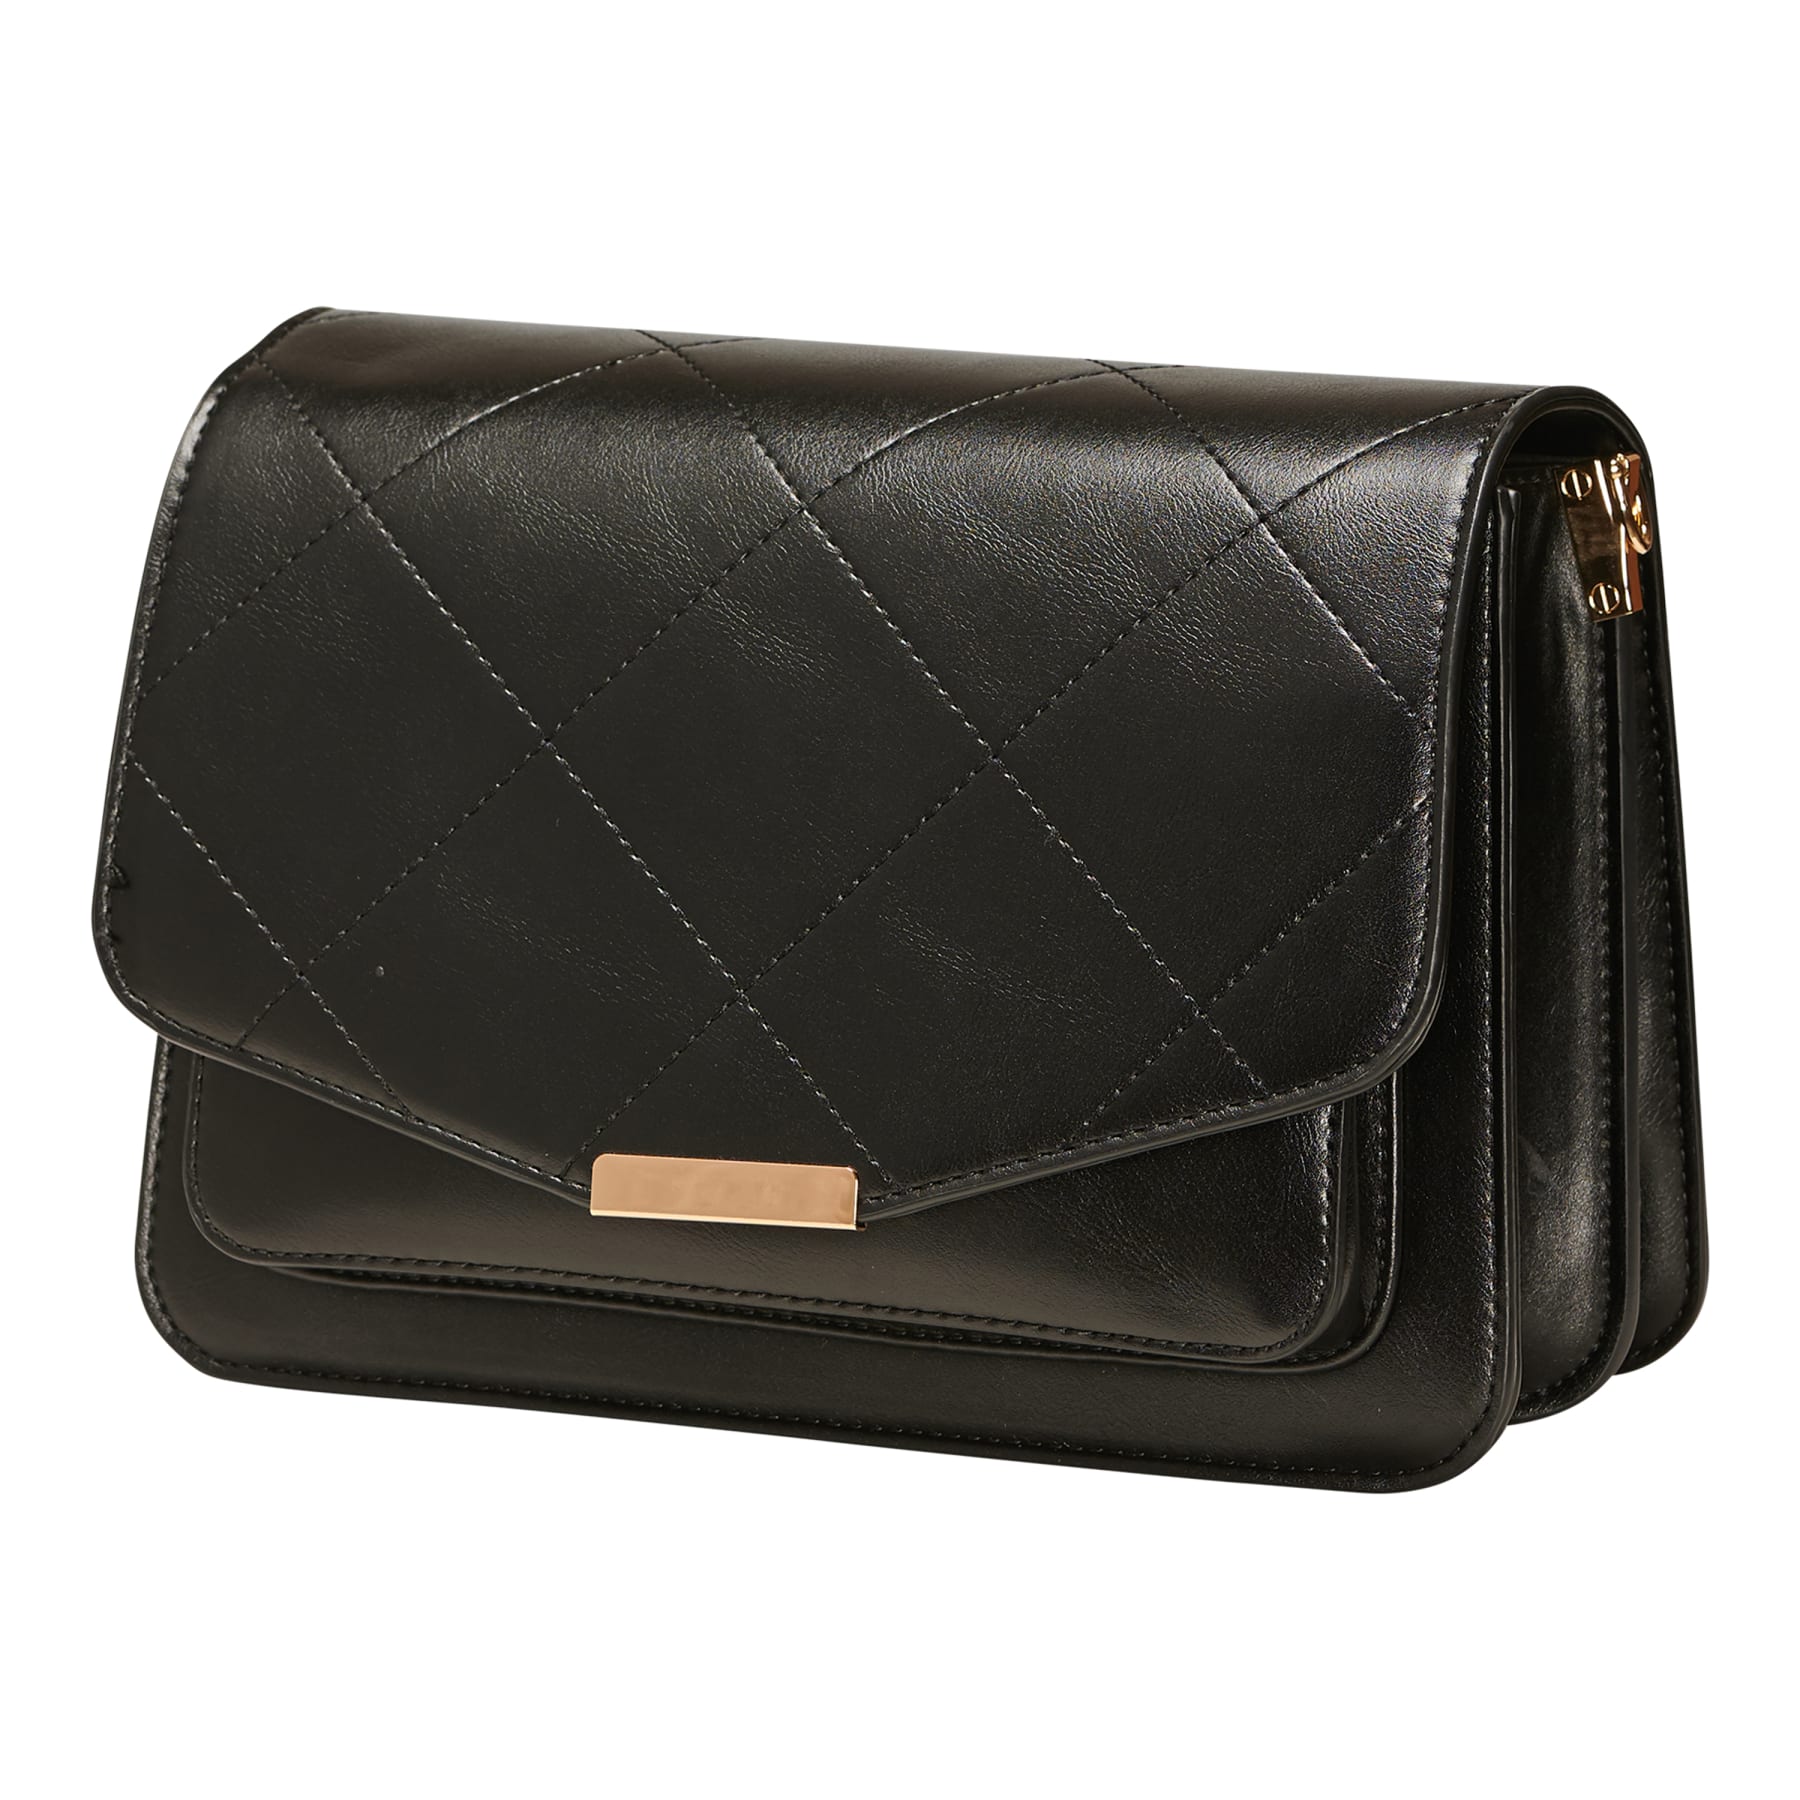 Blanca Multi Compartment Bag - Black Leather Look